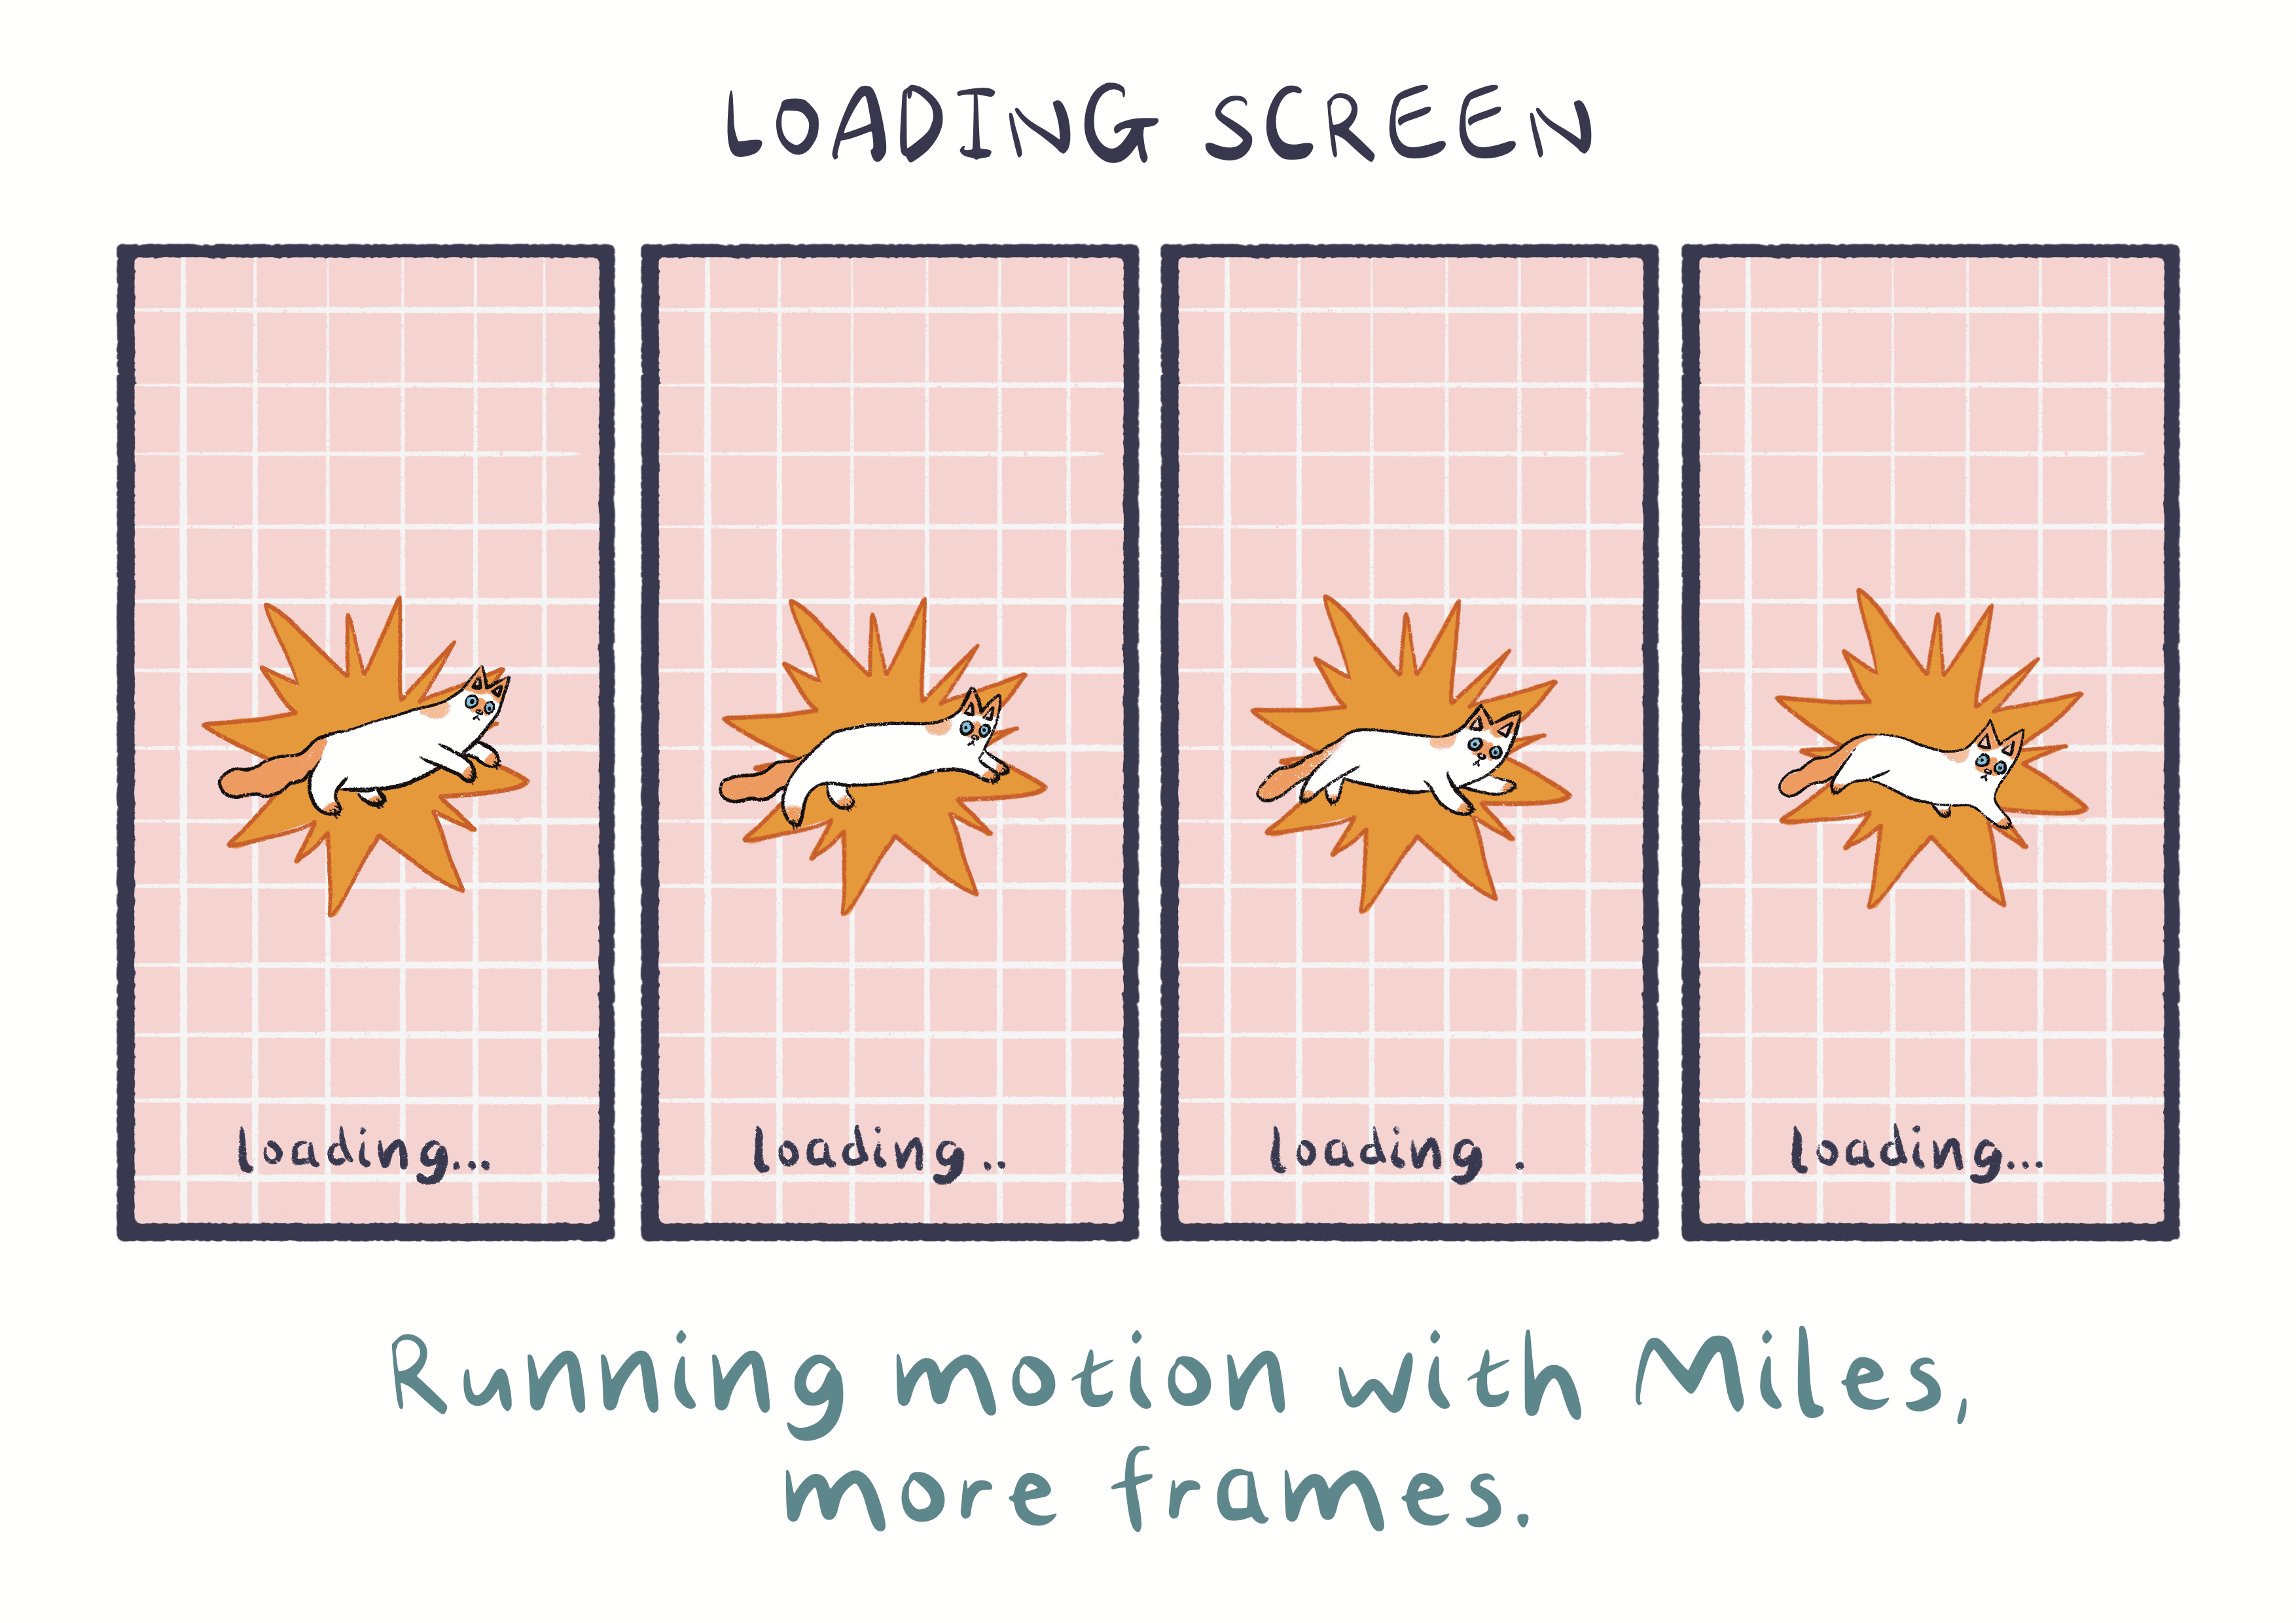 Loading screen